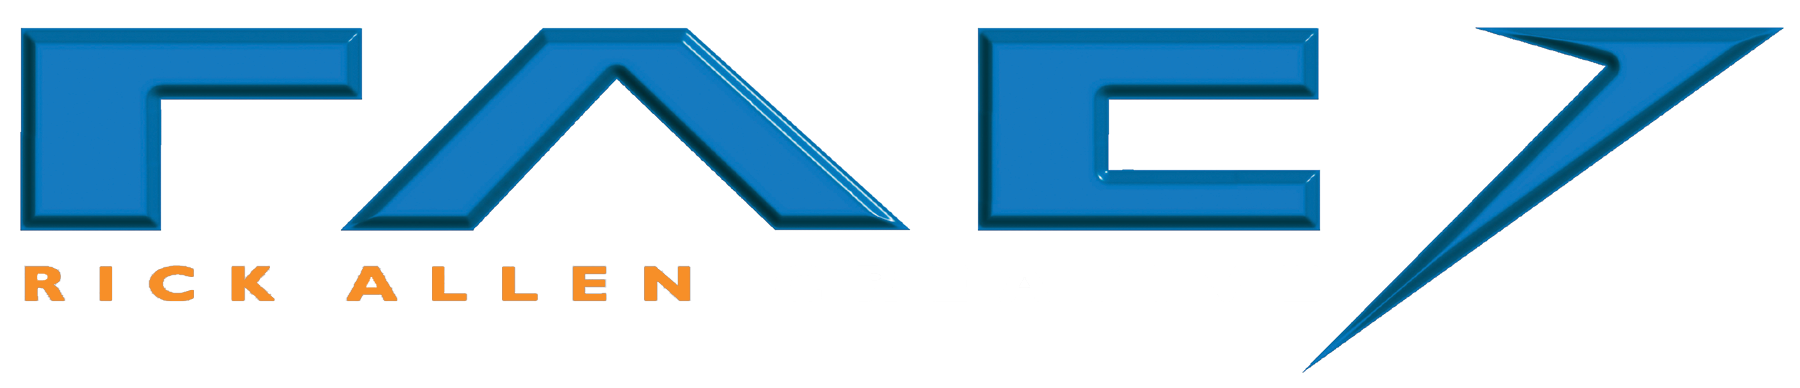 Rick Allen Creative Services, Inc